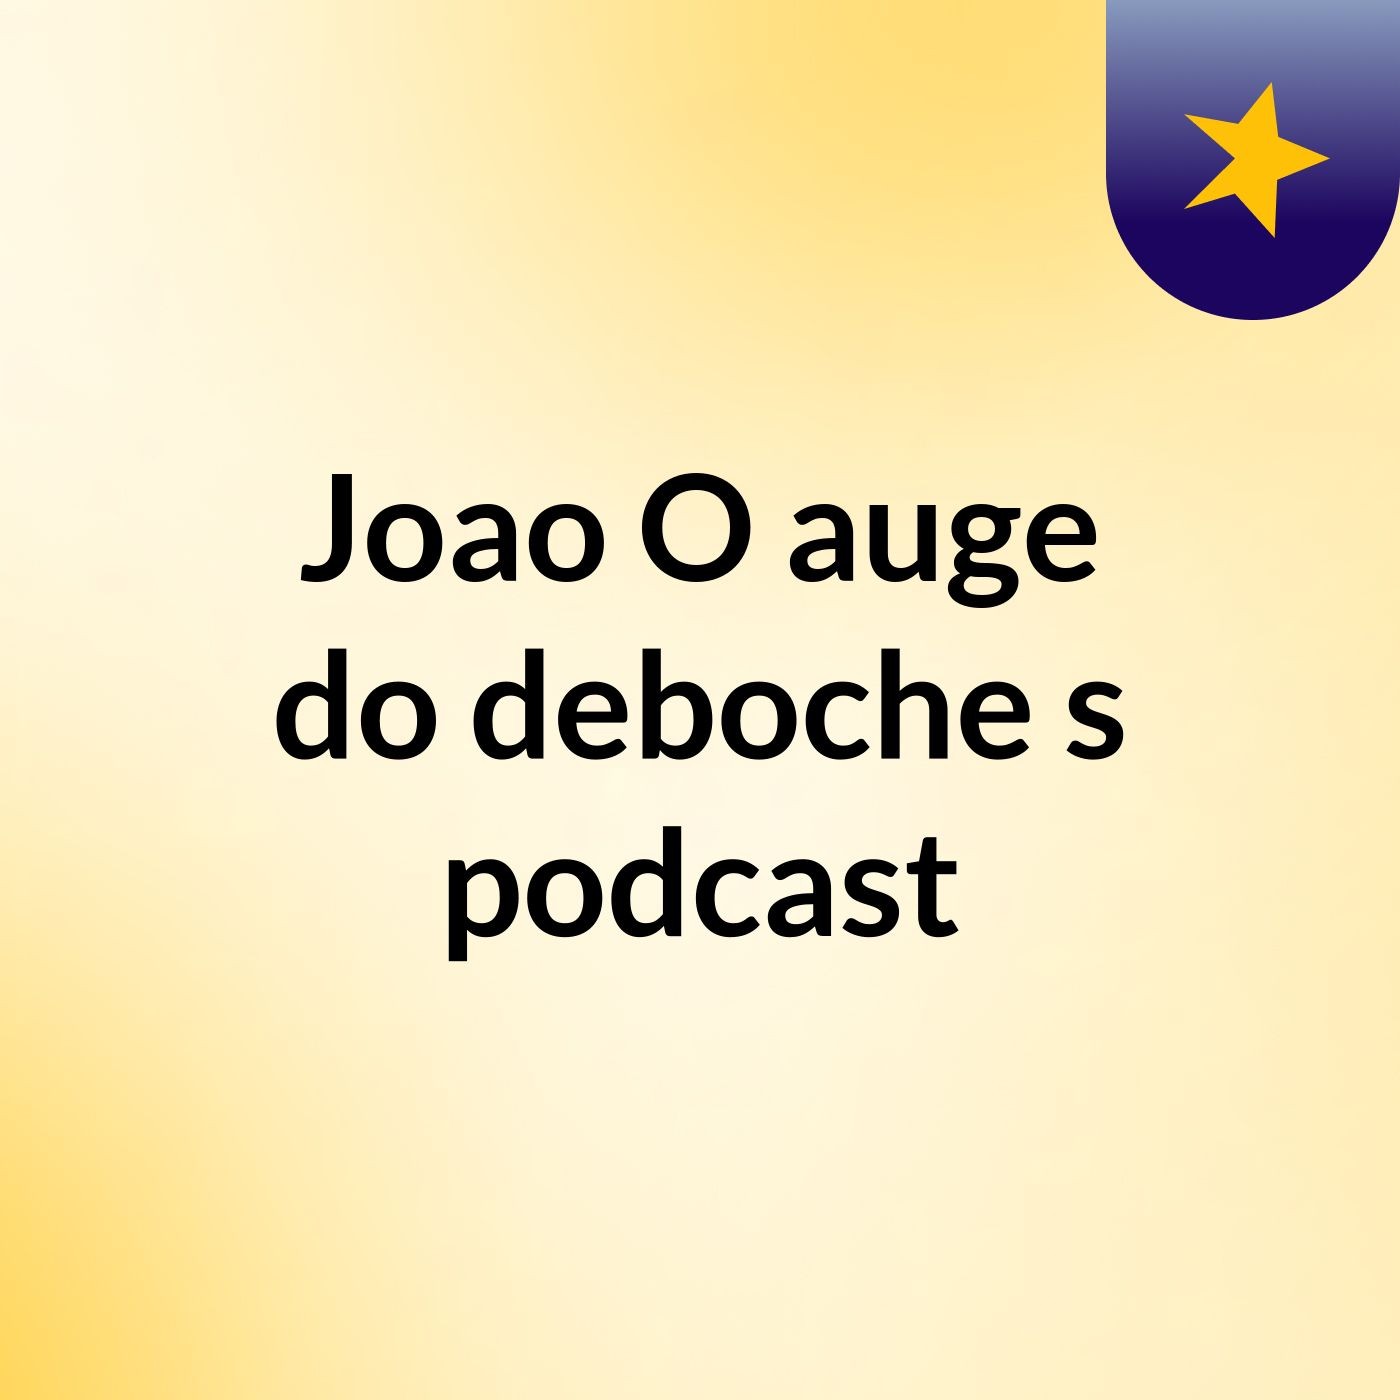 Joao O auge do deboche's podcast